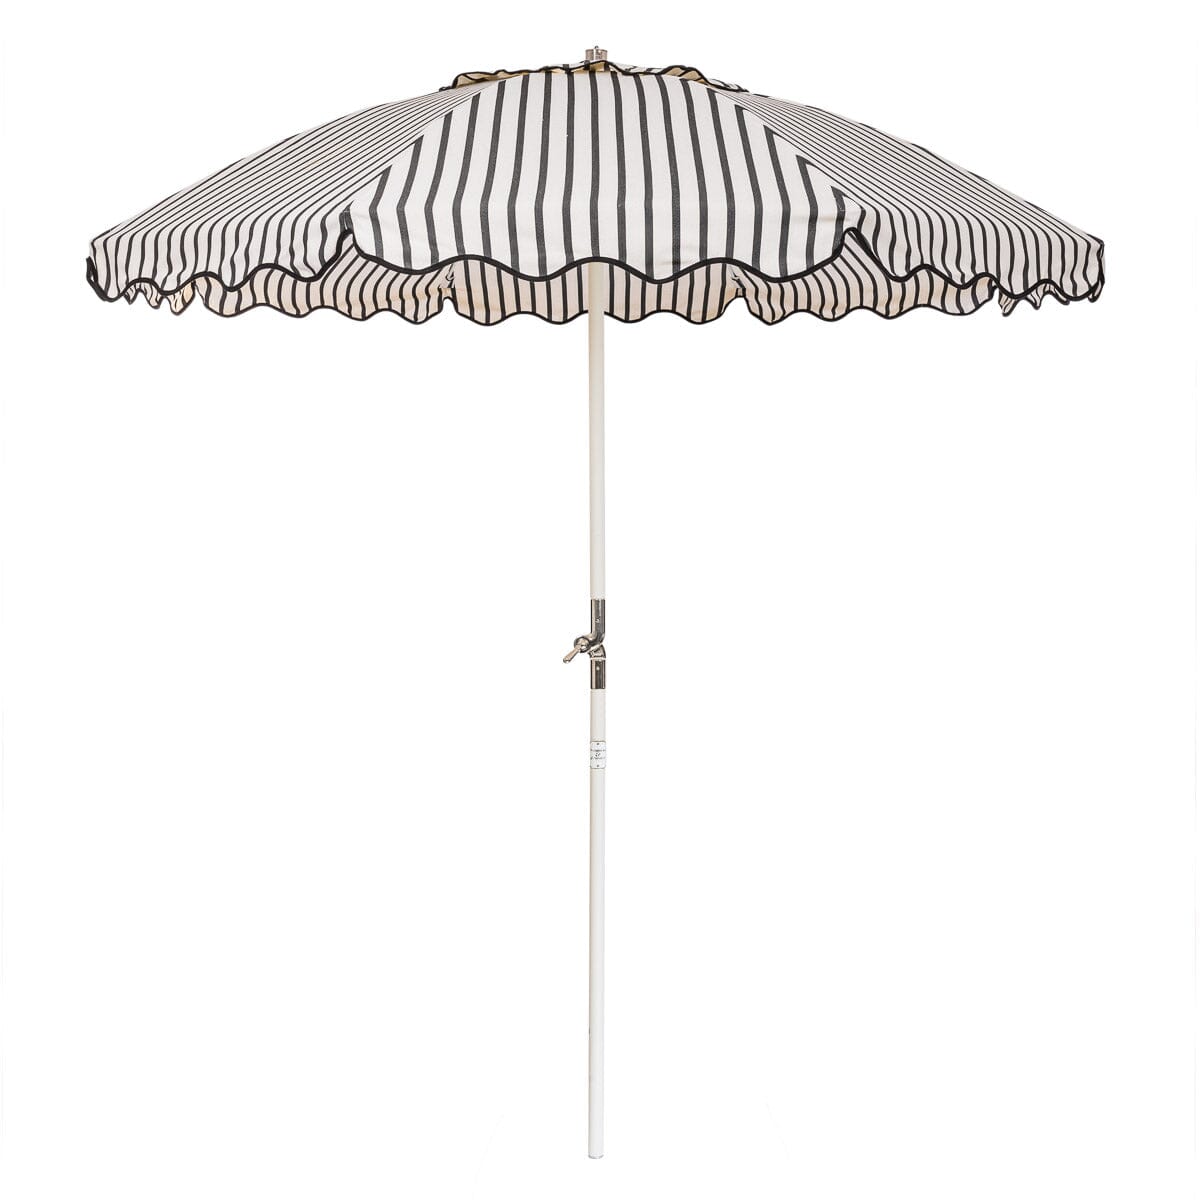 The Club Umbrella - Monaco Black Stripe Club Umbrella Business & Pleasure Co Aus 